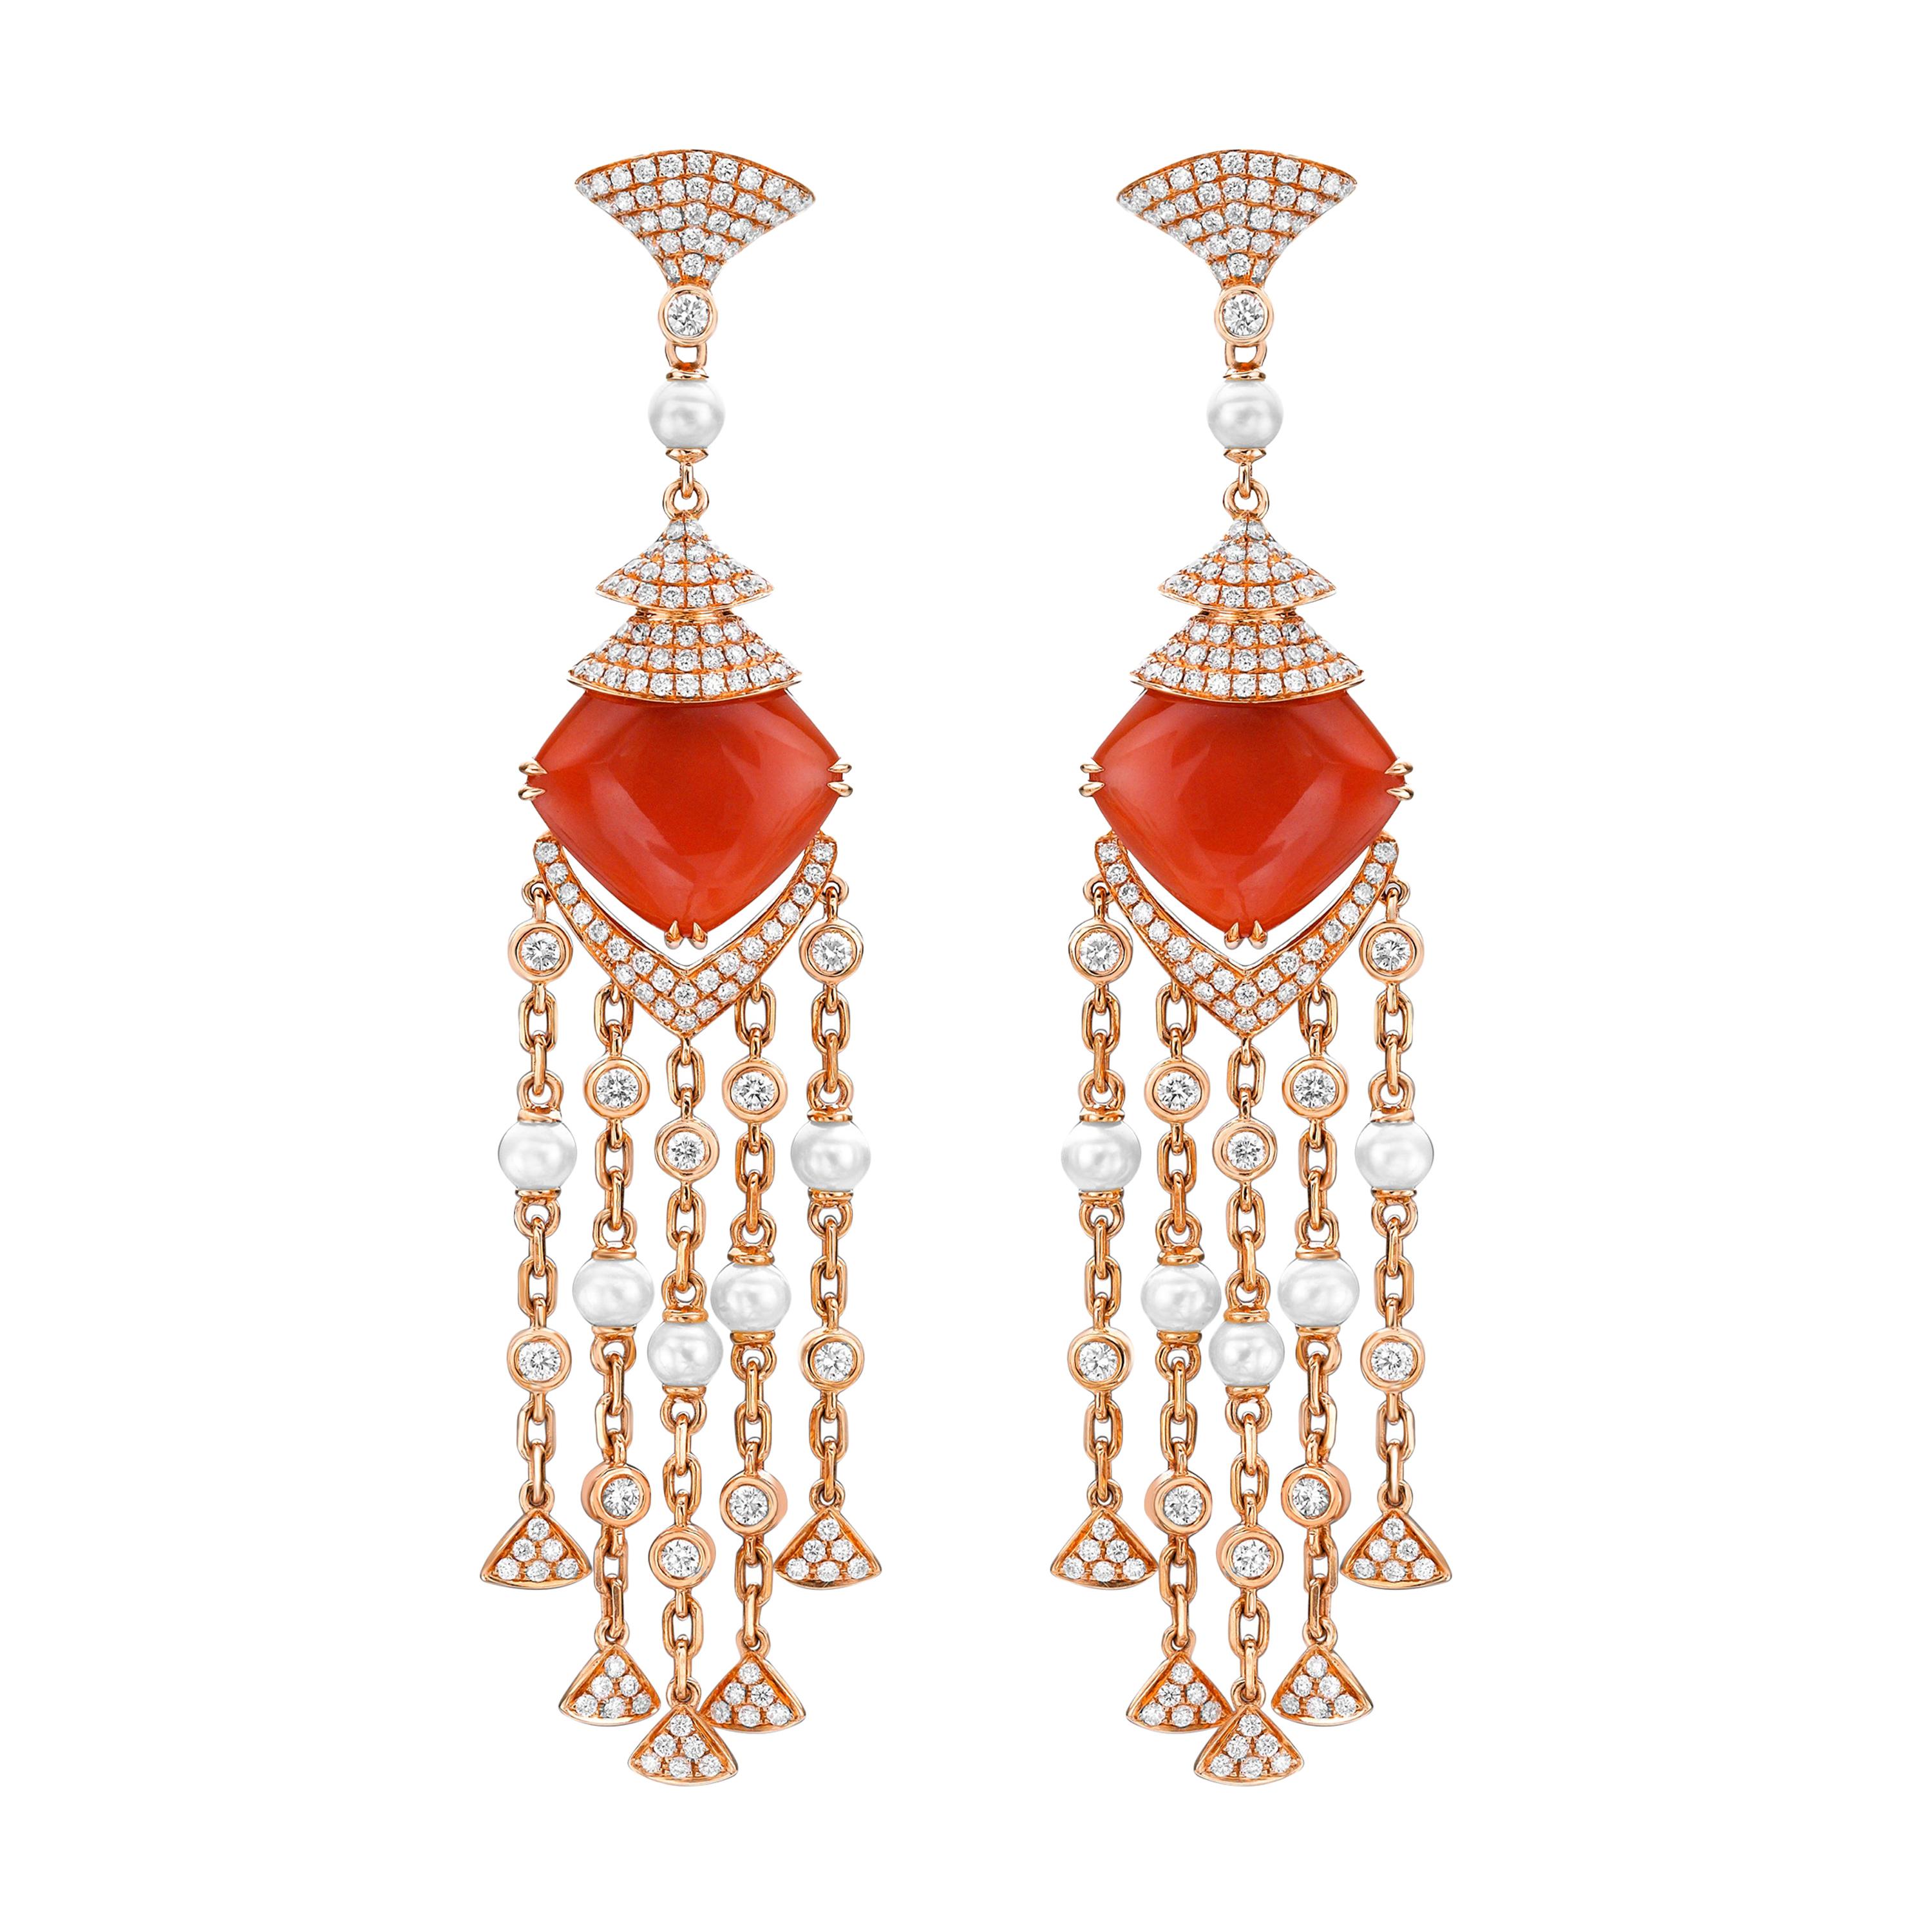 17.6 Carat Moonstone Earrings in 18 Karat Gold with Diamond & Pearls